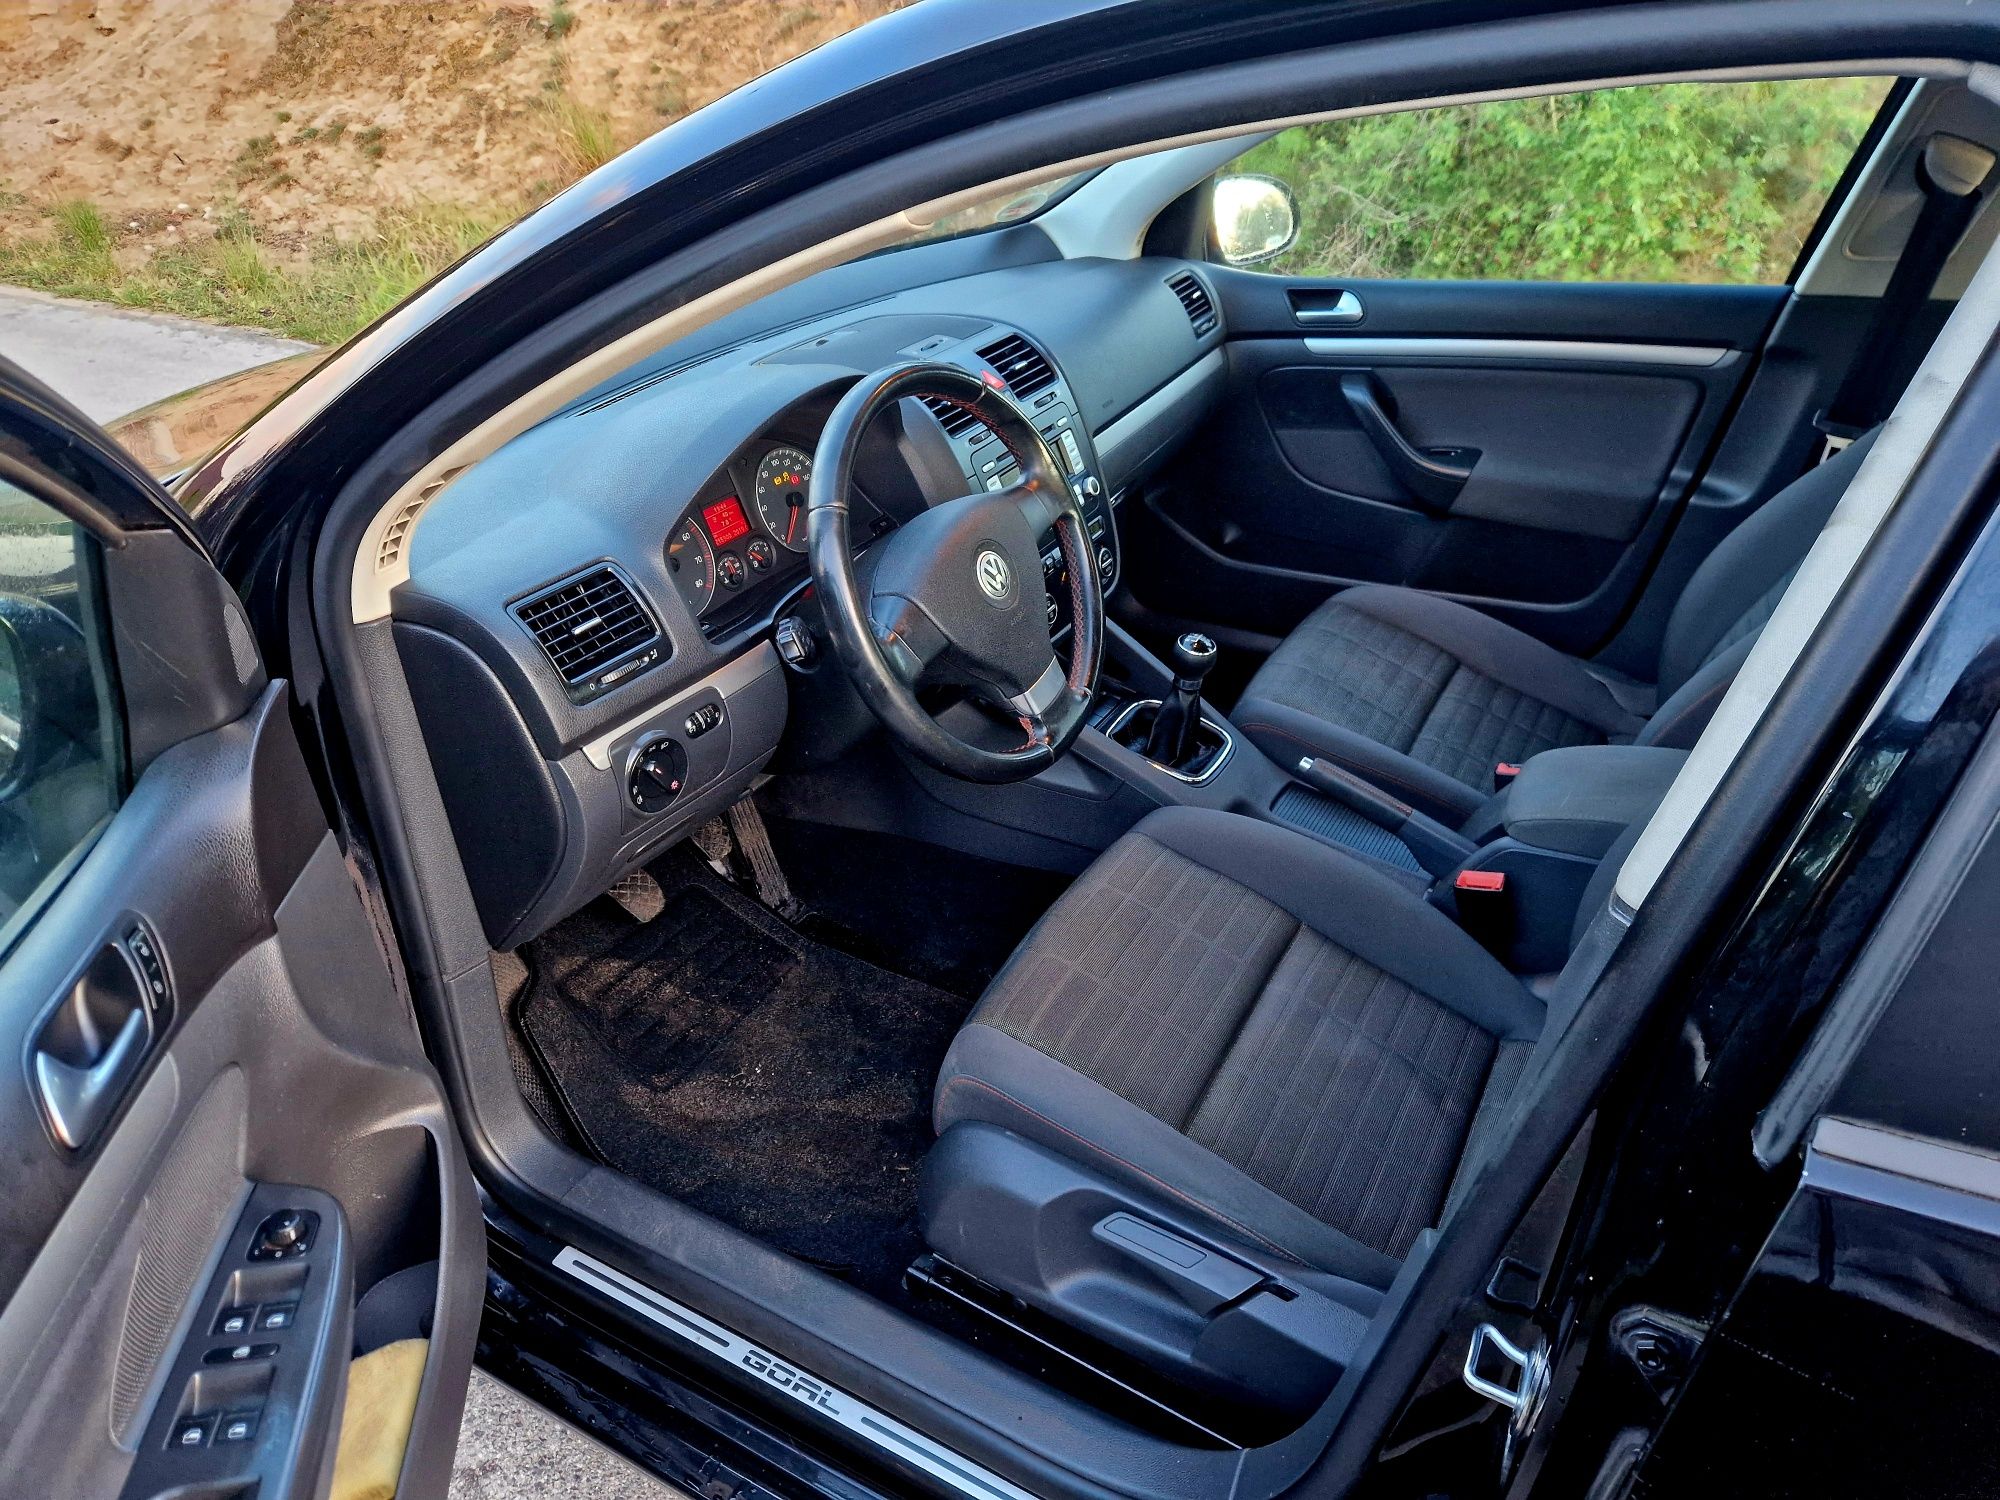 VW Golf 5 1.4 MPi 90 km 2006 rok klima Alu 18 cali